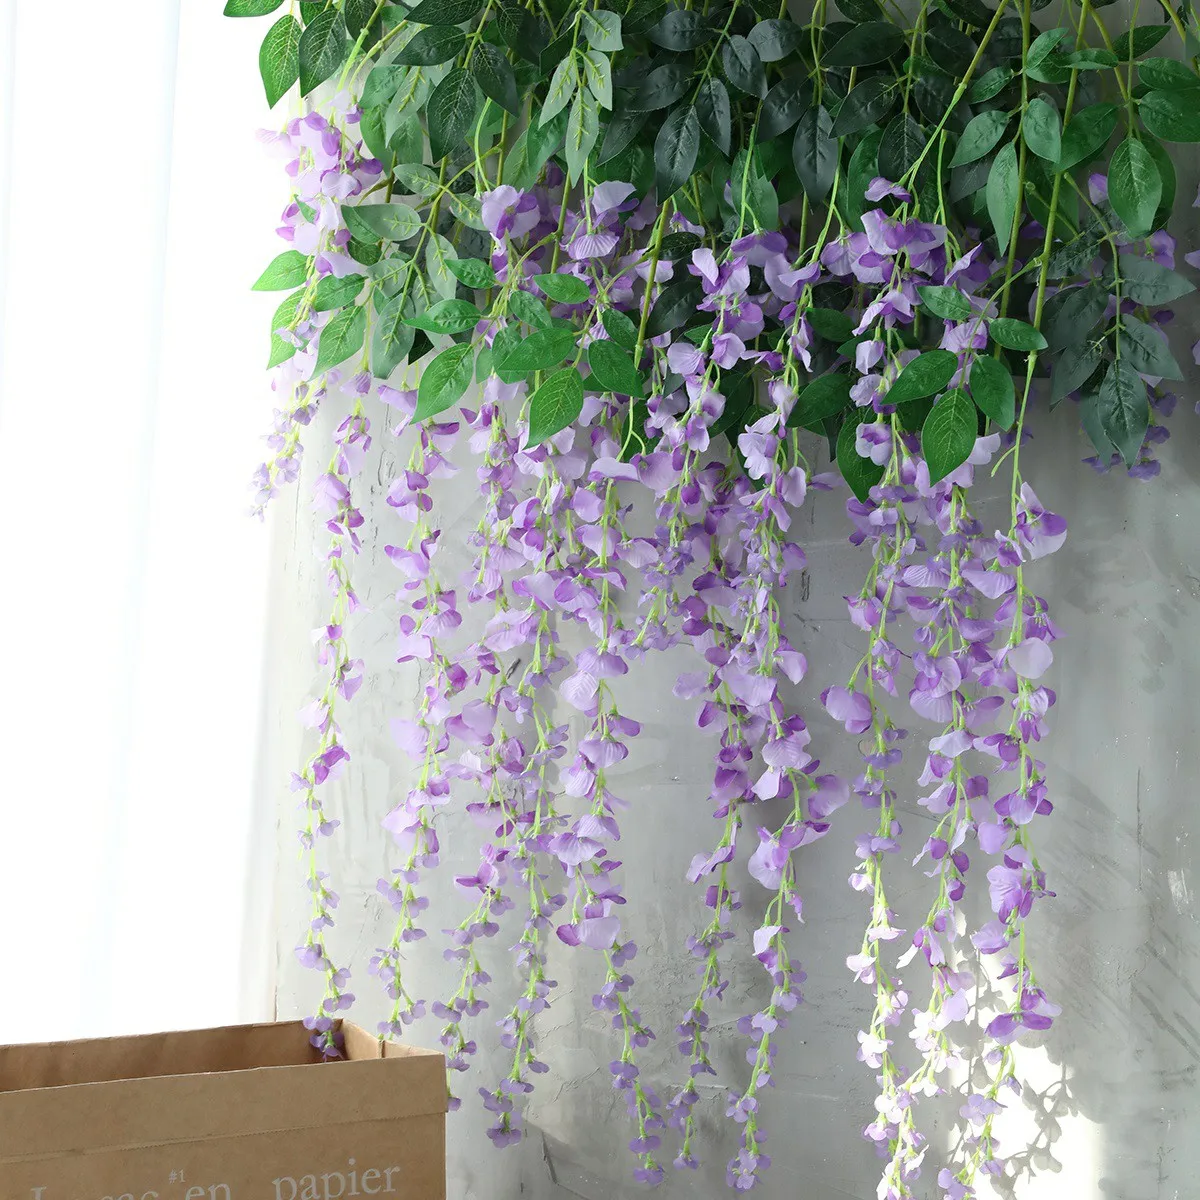 Luyue 12pcs/lot Wedding Decor Artificial Silk Wisteria Flower Vines hanging Rattan Bride flowers Garland For Home Garden Hotel